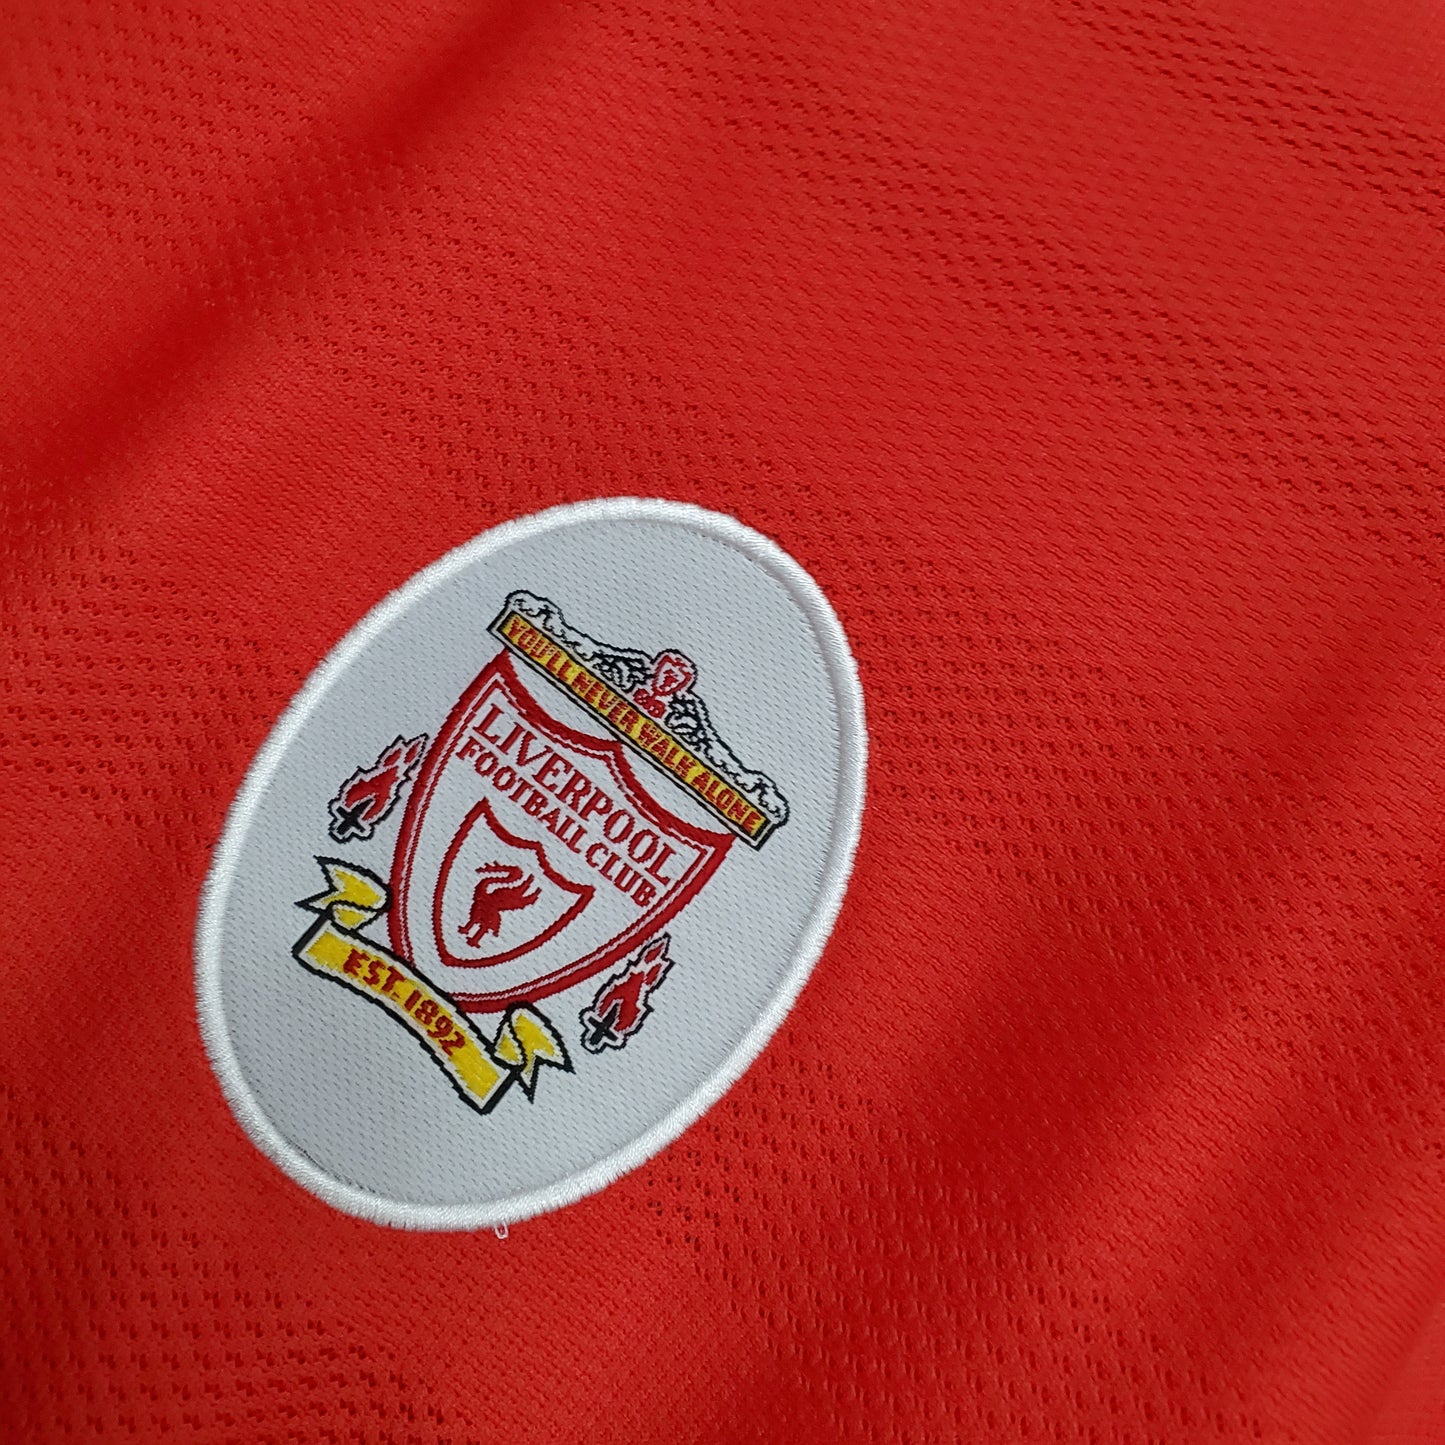 1998/99 Liverpool Home Shirt